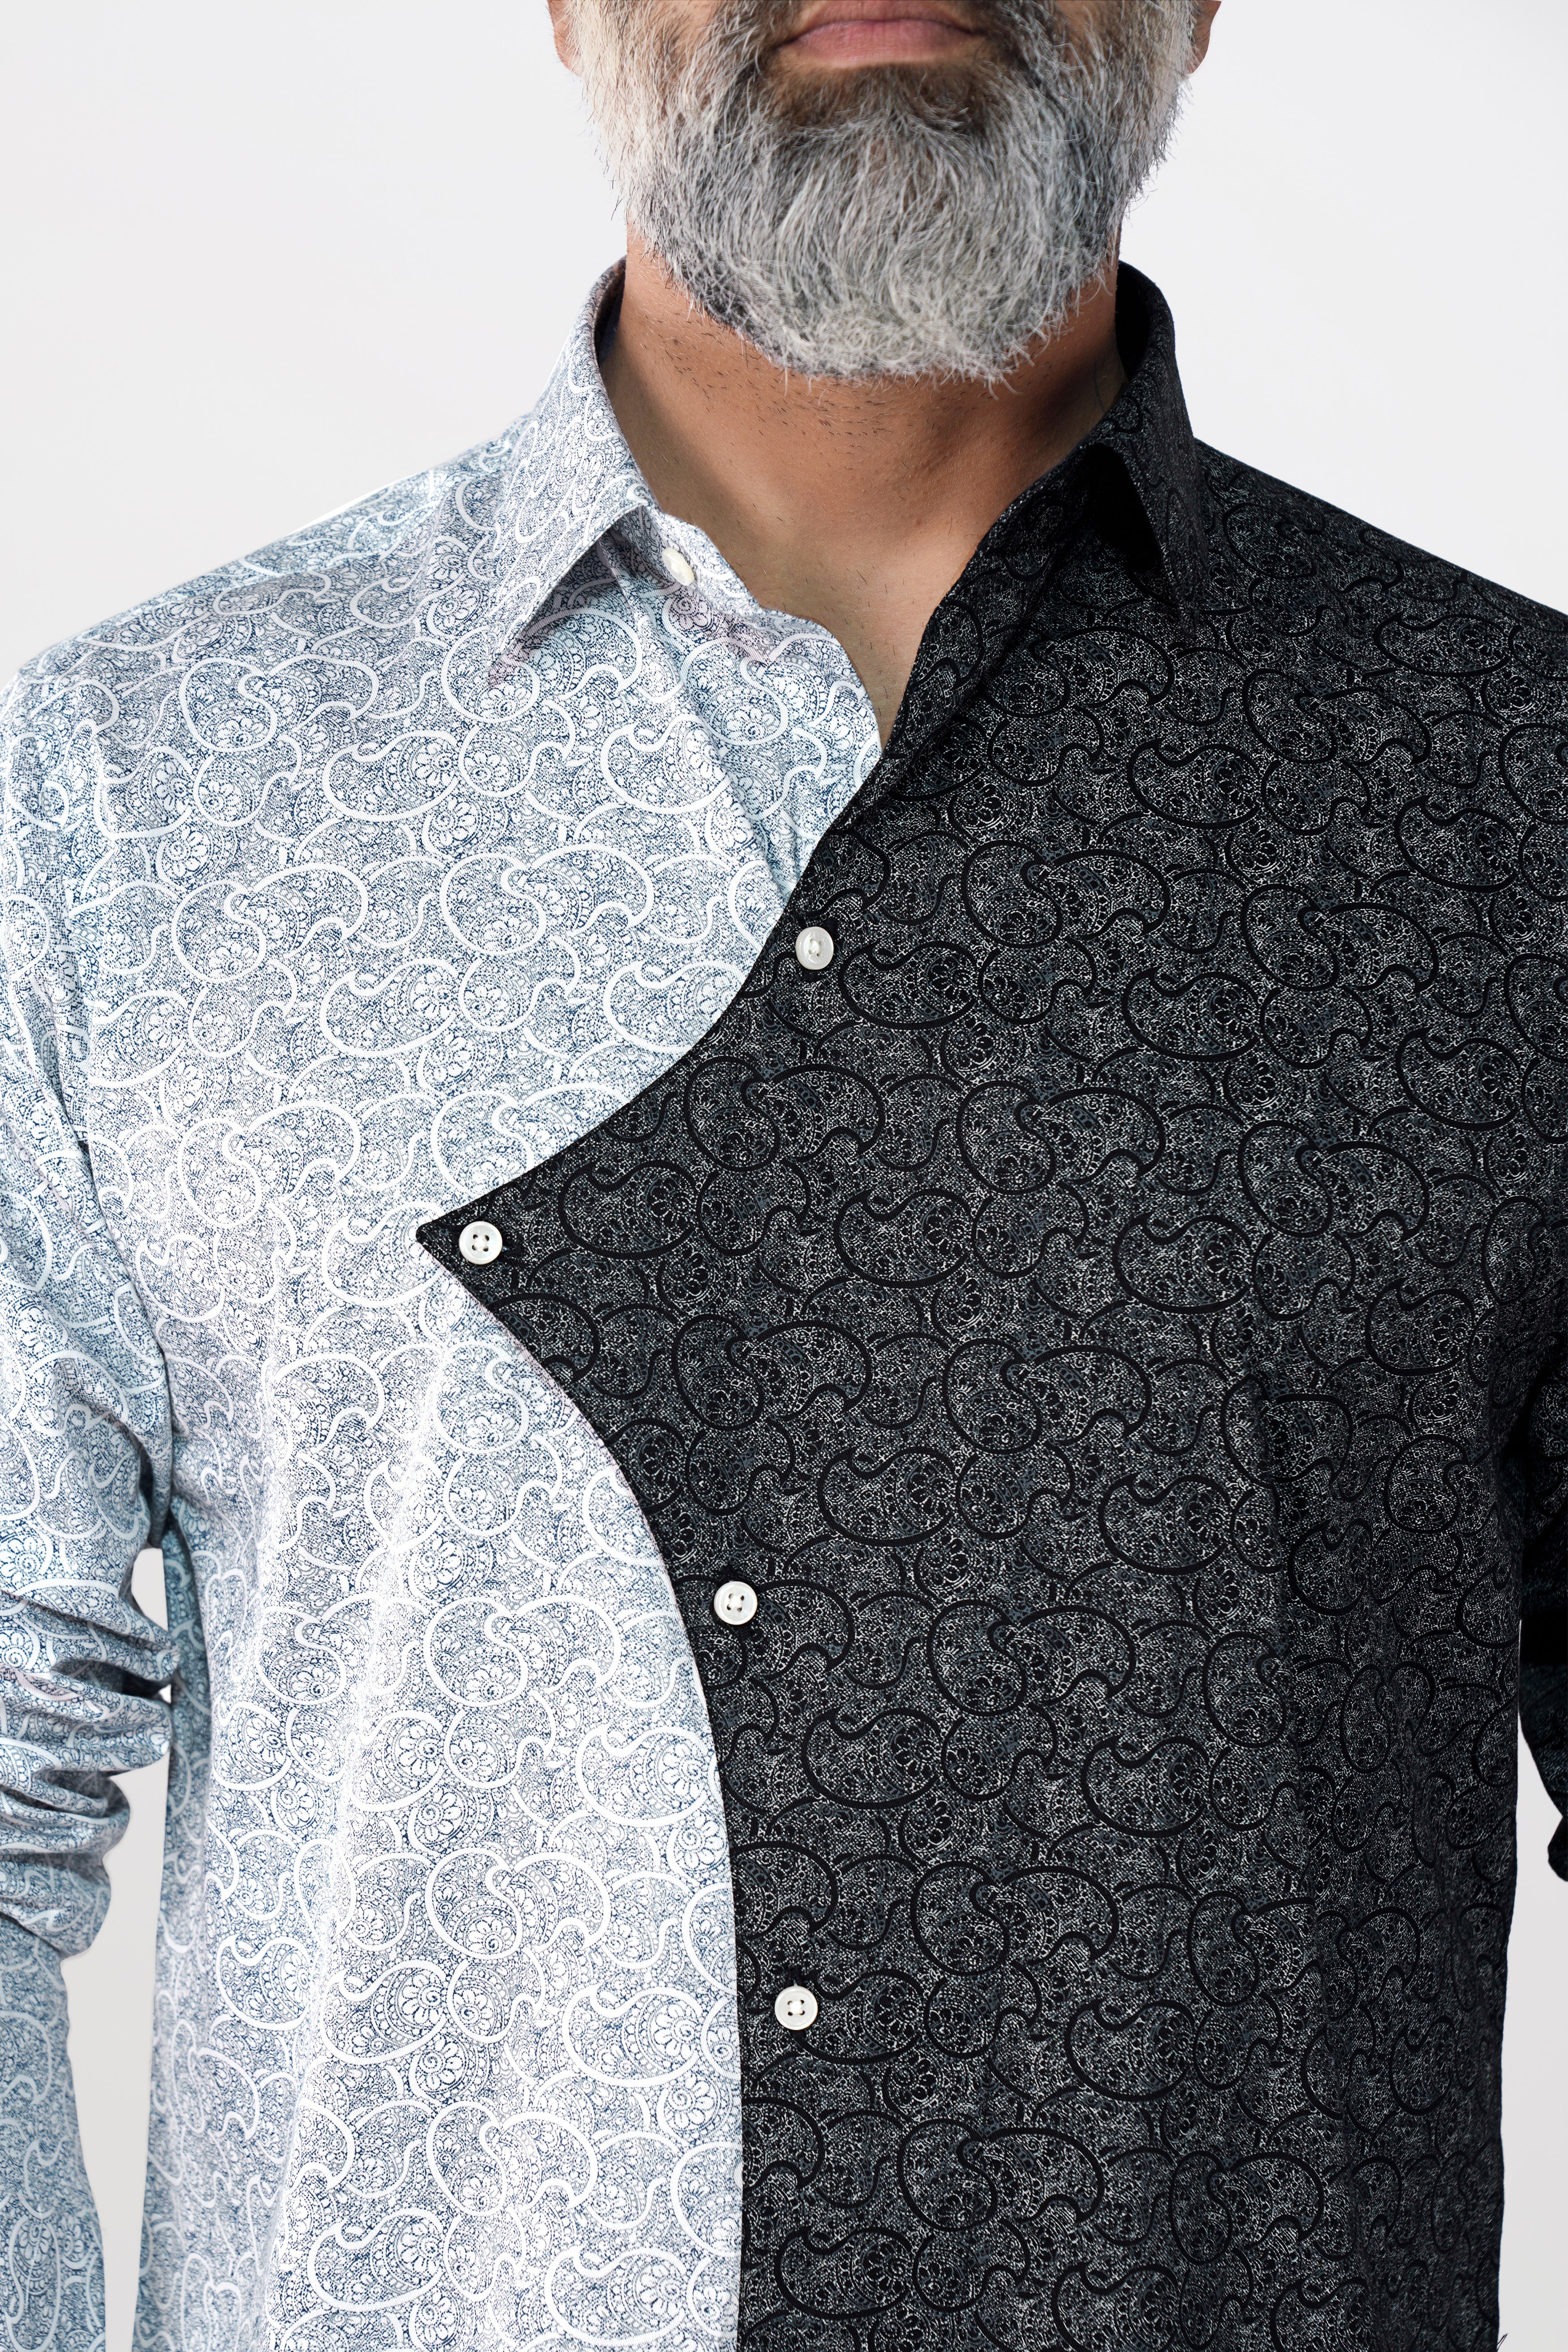 Half Lagoon Blue and Half Black Paisley Printed Super Soft Premium Cotton Designer Shirt